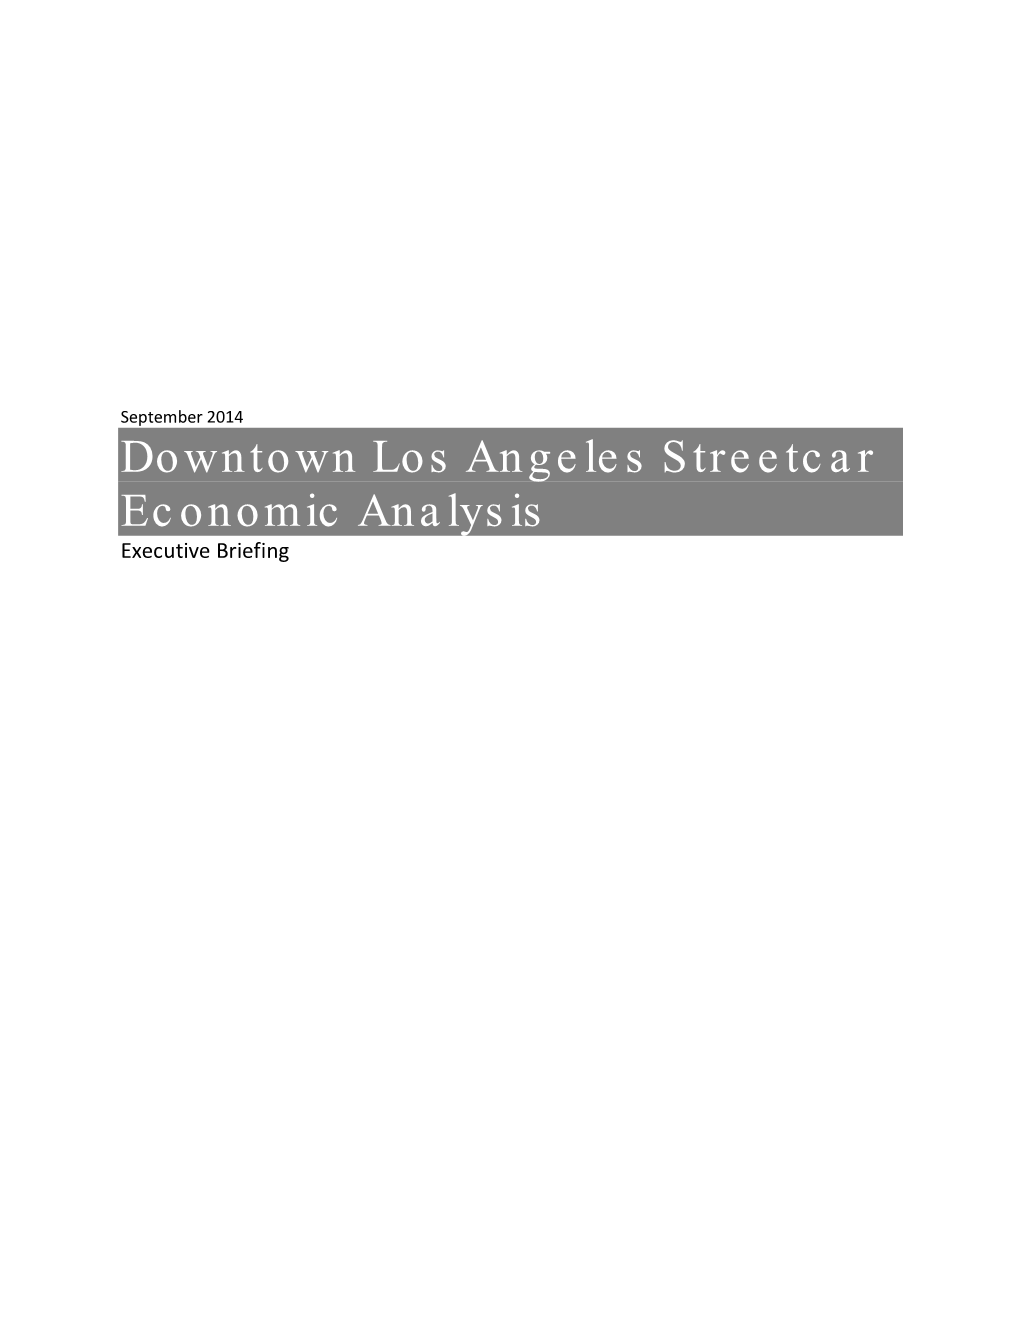 Downtown Los Angeles Streetcar Economic Analysis Executive Briefing